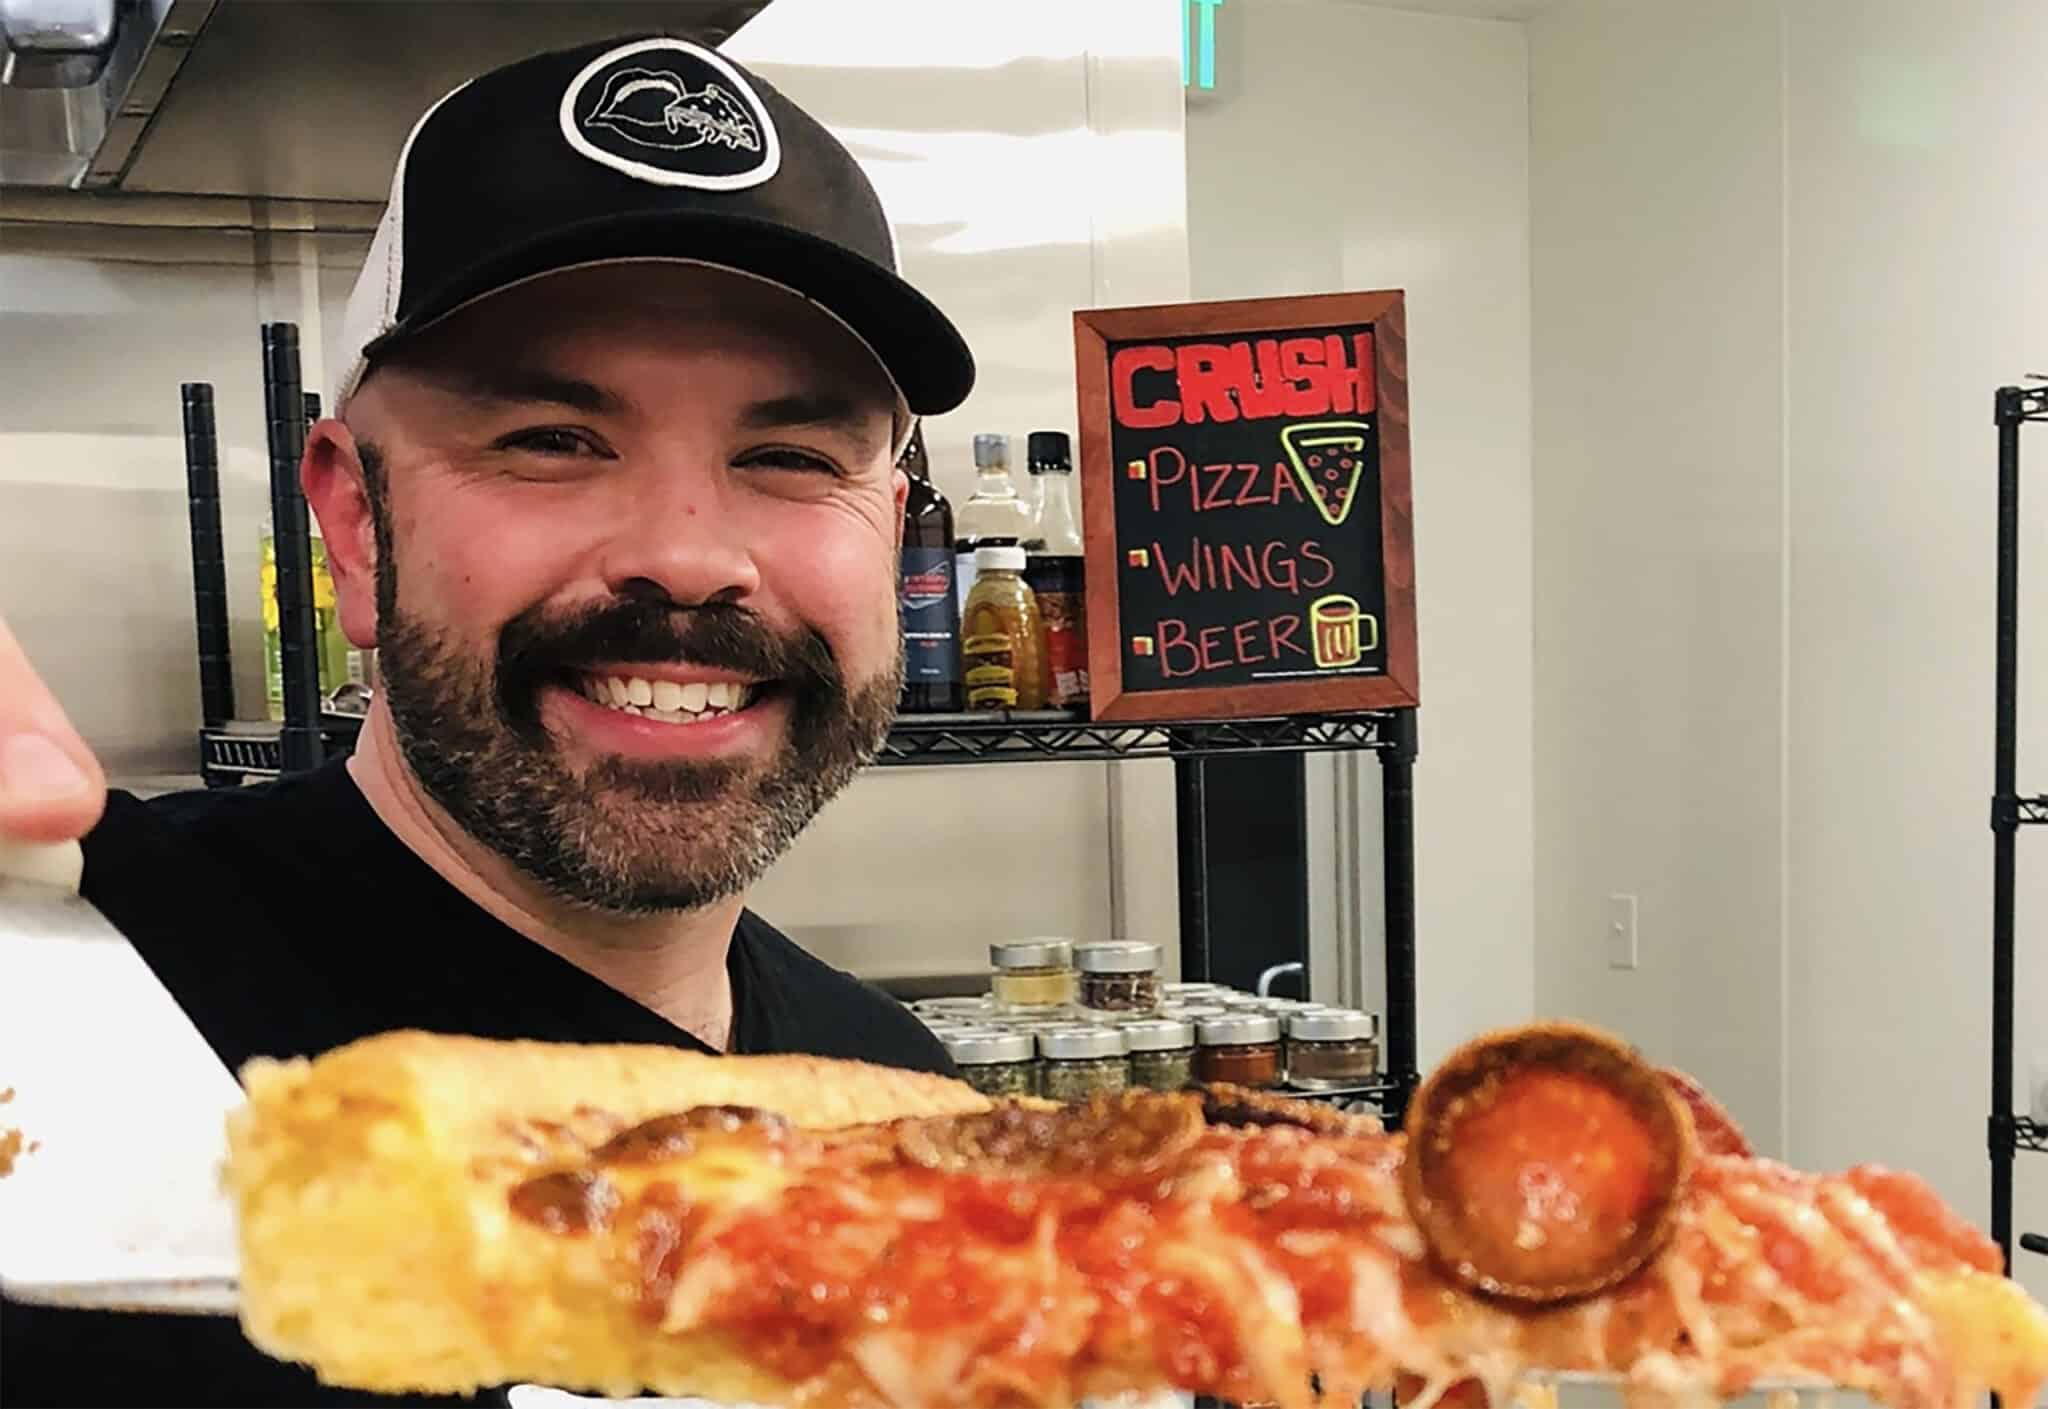 Crush Pizza in Denver closes